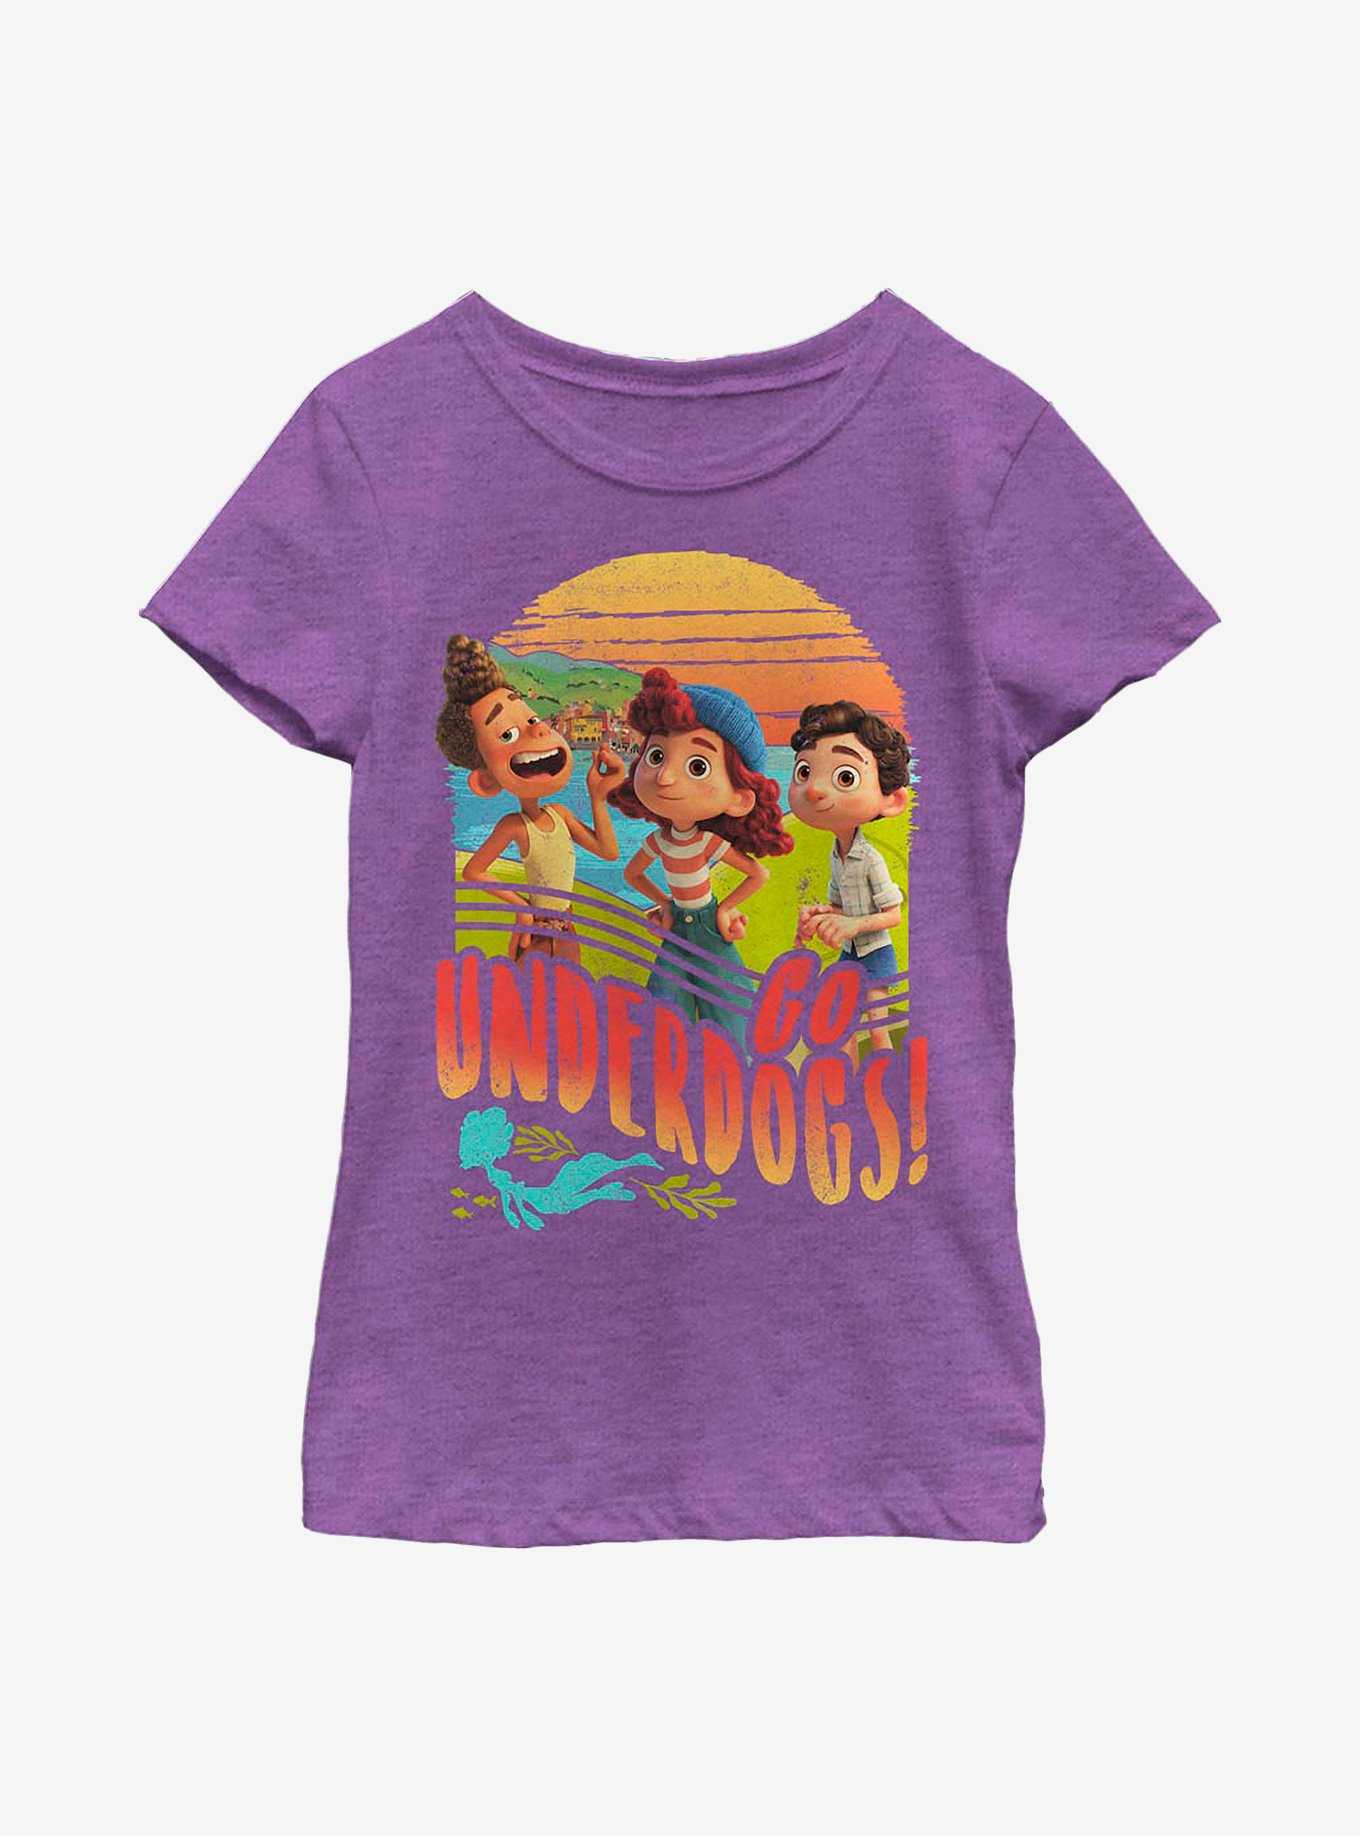 Disney Pixar Luca Go Underdogs! Youth Girls T-Shirt, , hi-res